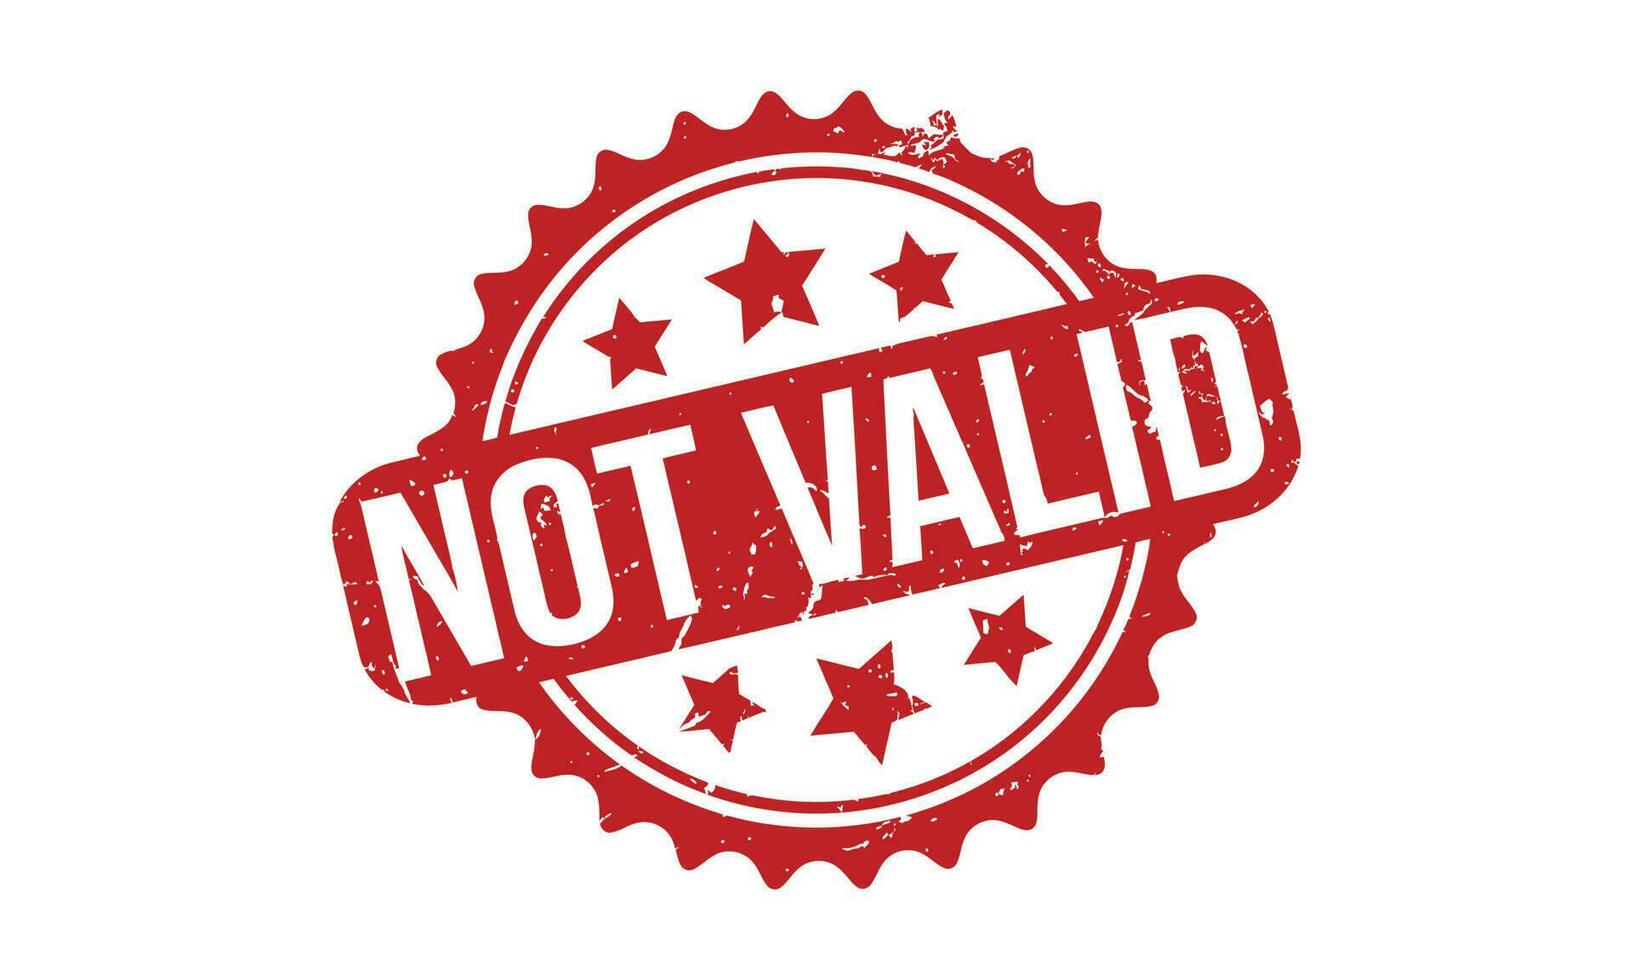 Not Valid Rubber Stamp. Red Not Valid Rubber Grunge Stamp Seal Vector Illustration